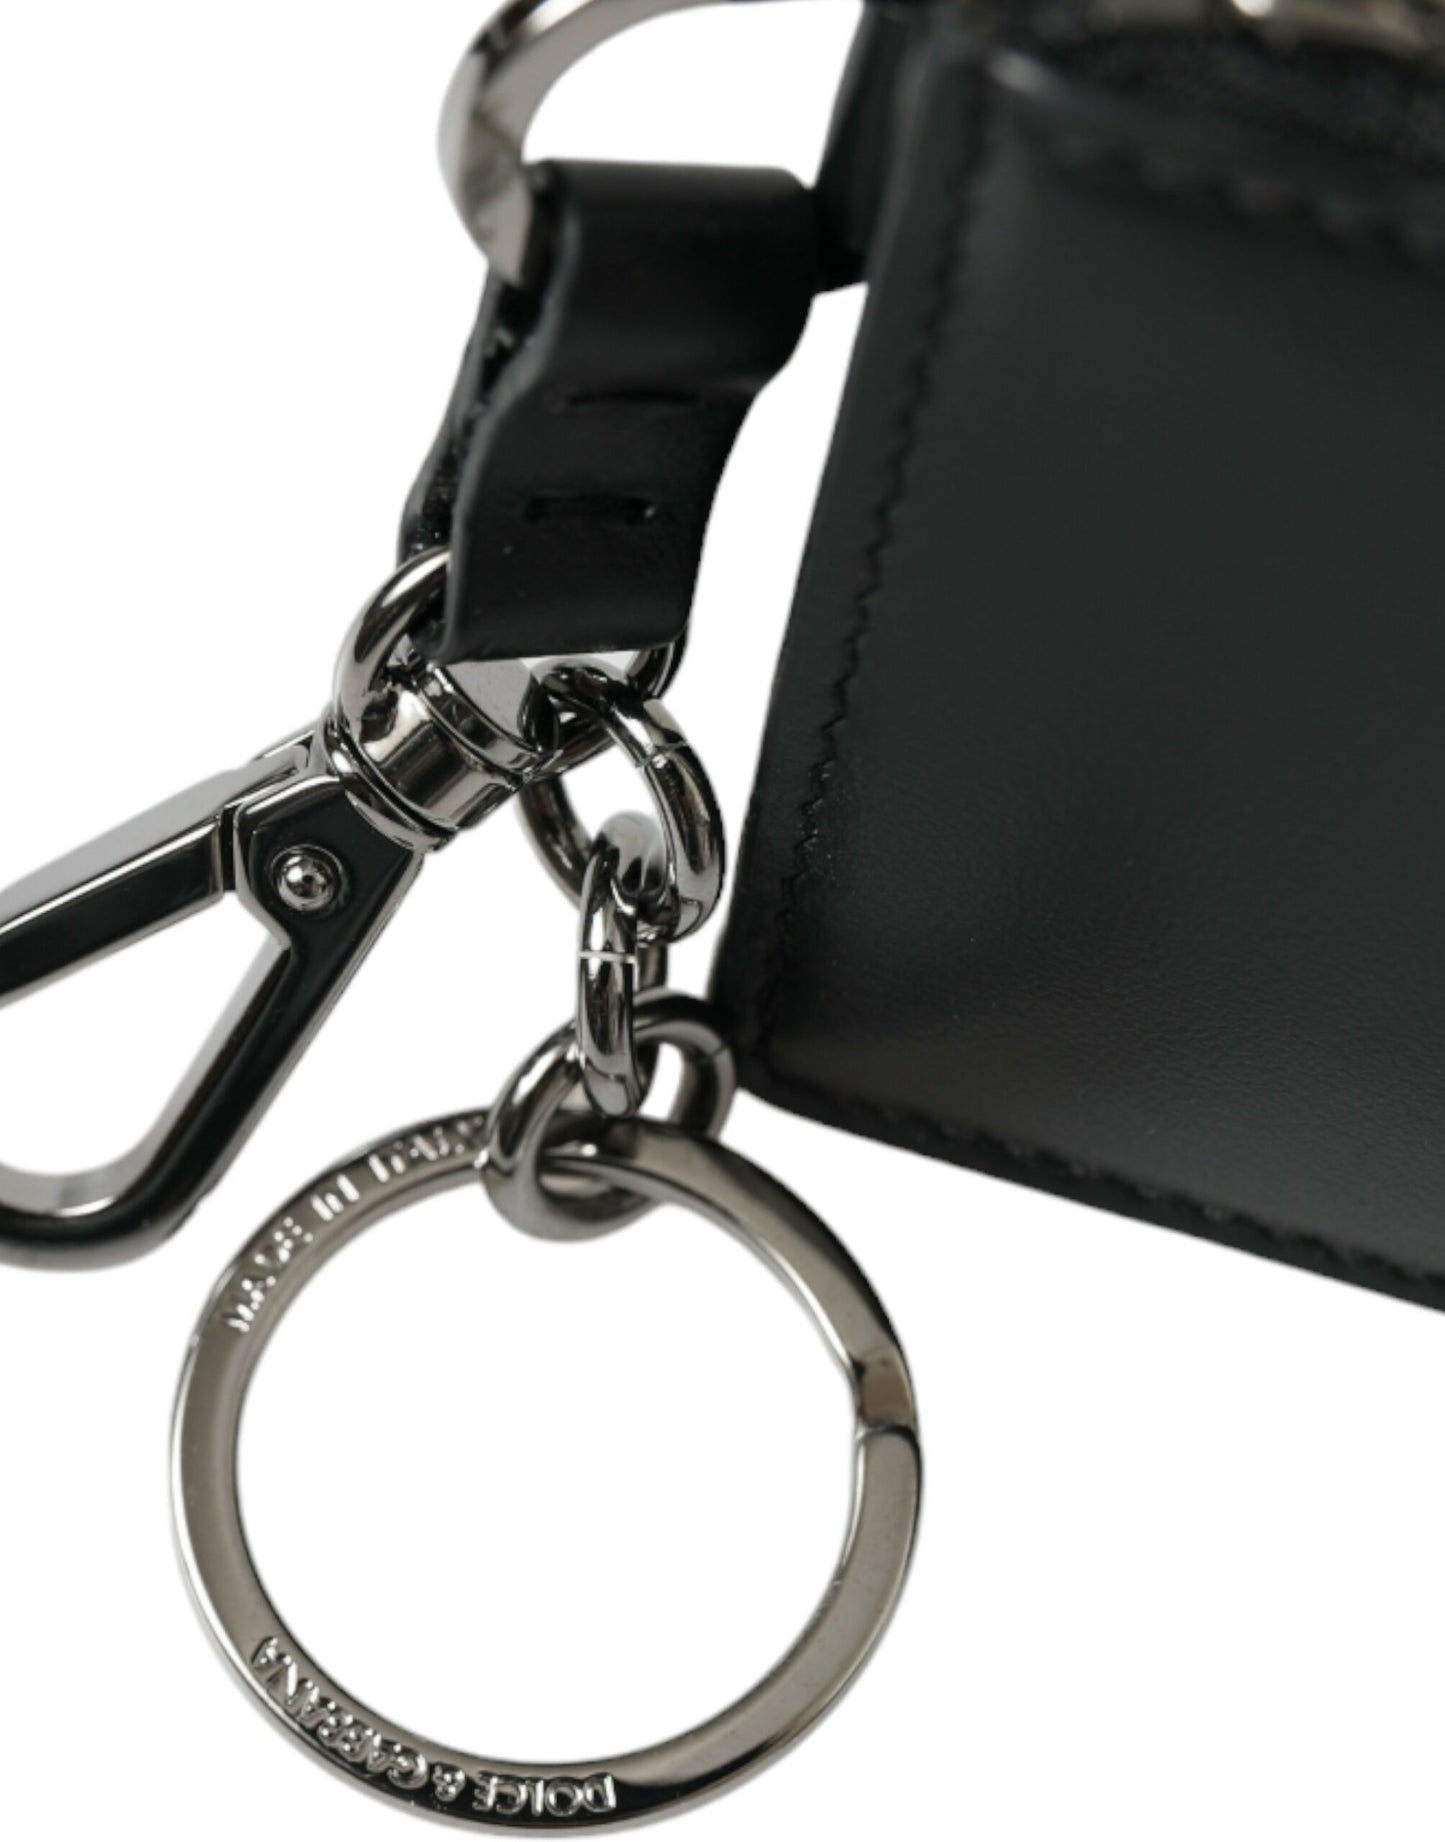 Dolce & Gabbana Black Leather Zip Logo Strap Multi Kit Airpod Case